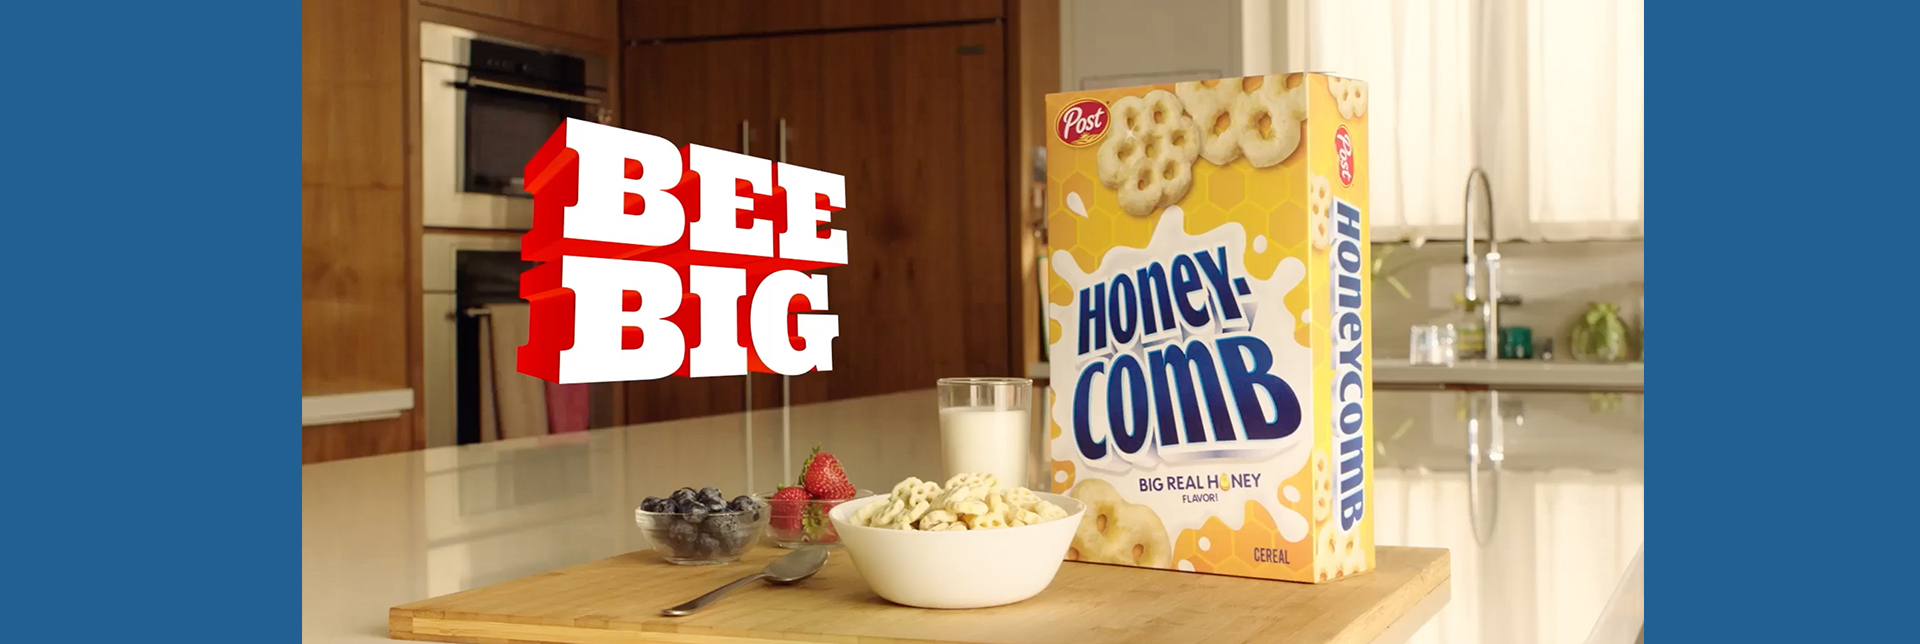 Bee Big Honeycomb cereal box